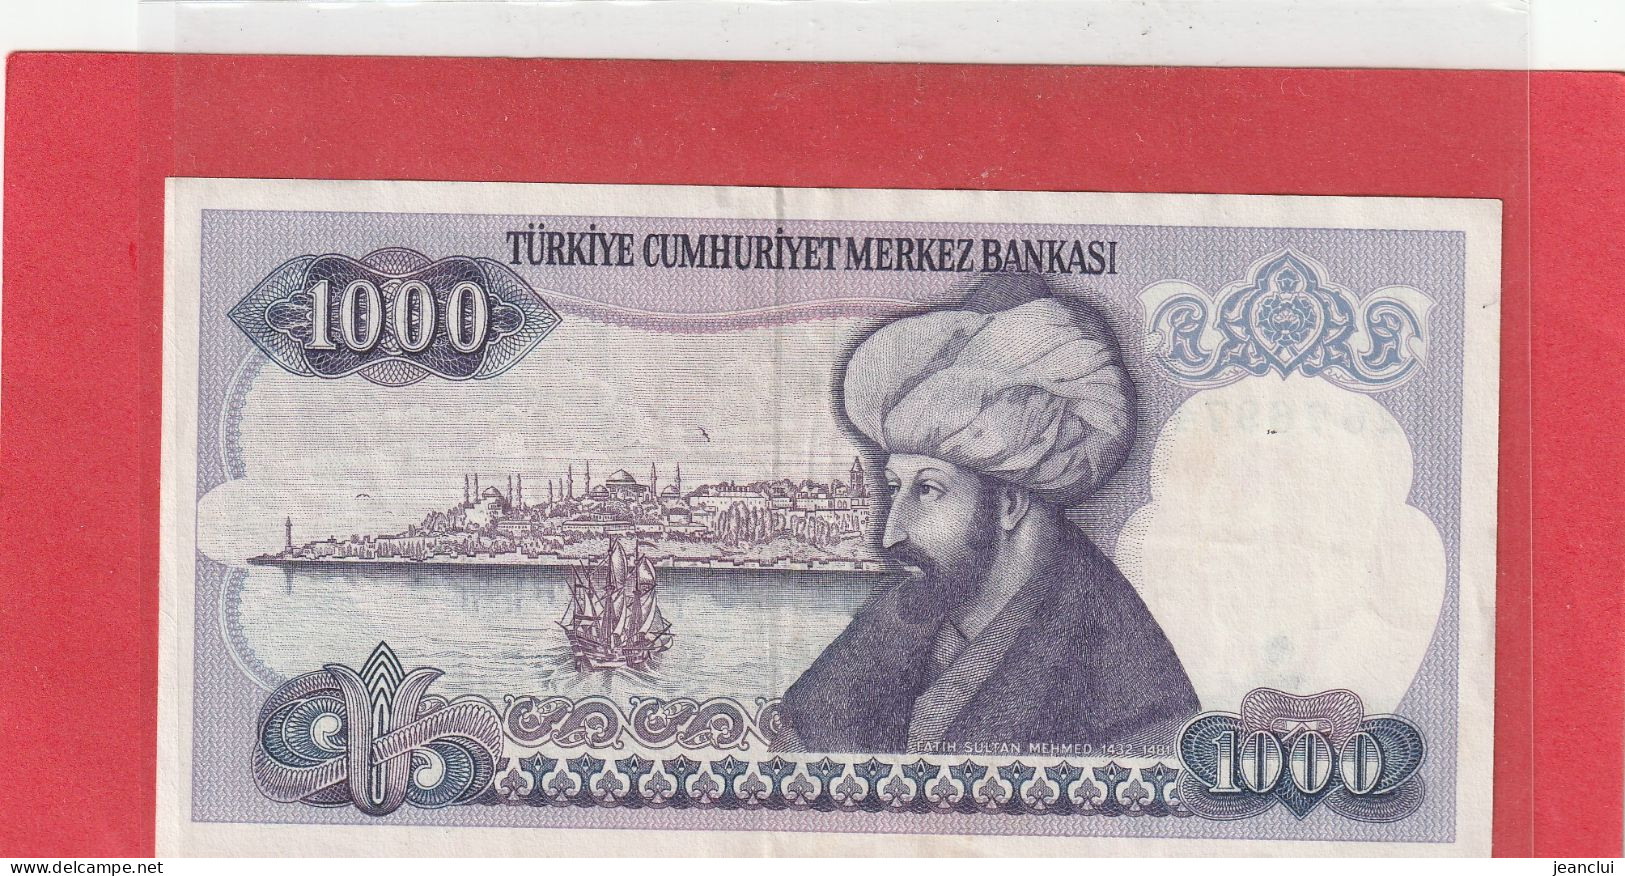 TURKIYE CUMHURIYET MERKEZ BANKASI . 1.000 LIRA . 14 OCAK 1970  . N°  A26 769745 .  2 SCANNES  .  BILLET USITE - Turquia